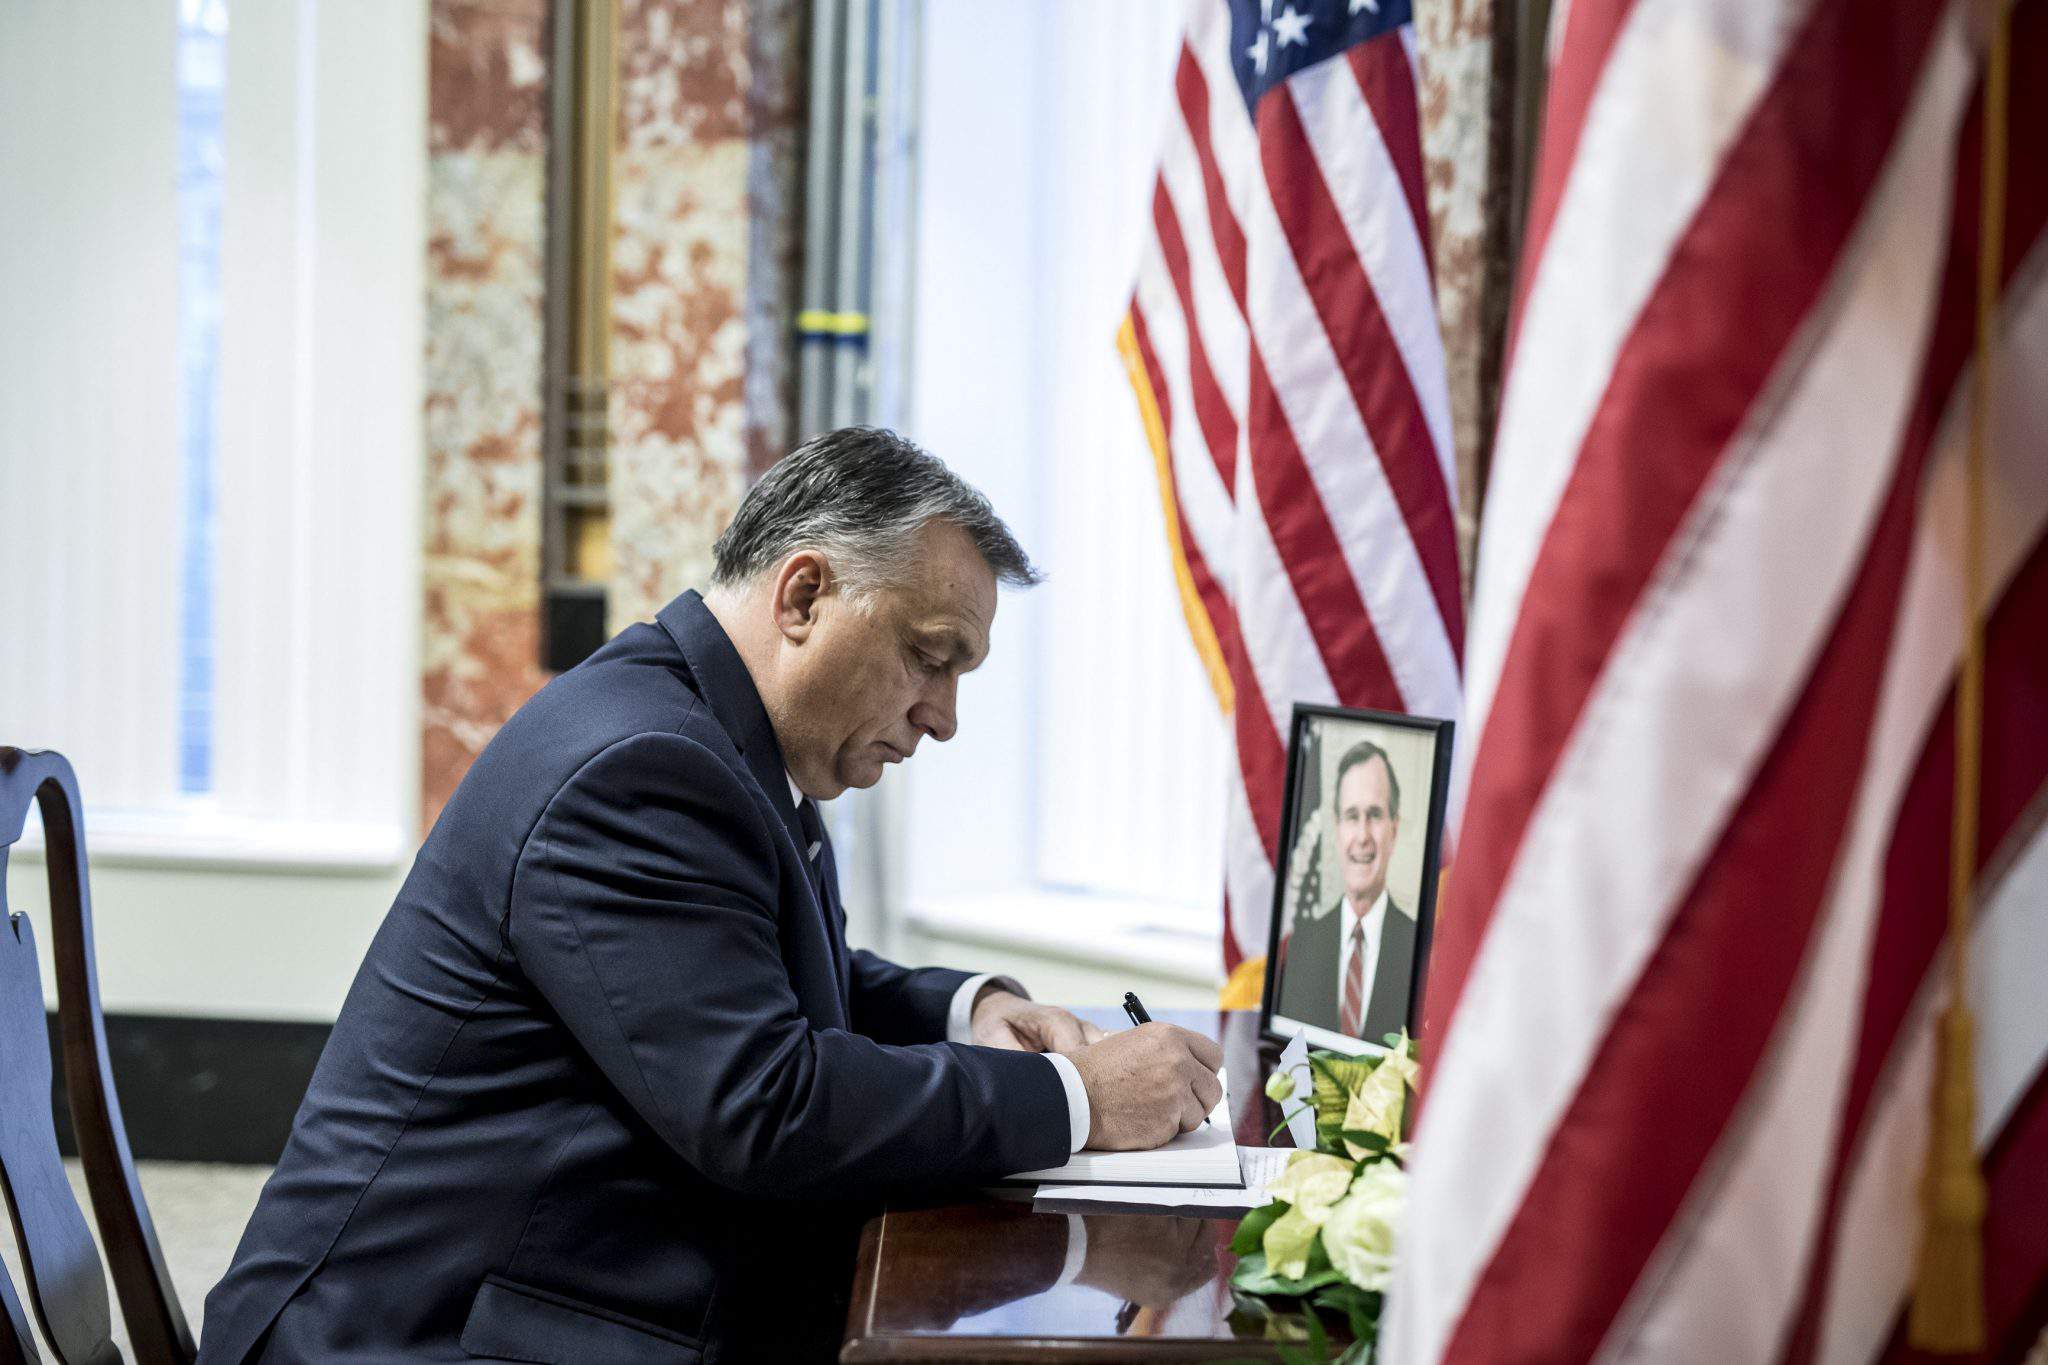 Orbán Bush Ambassade des États-Unis